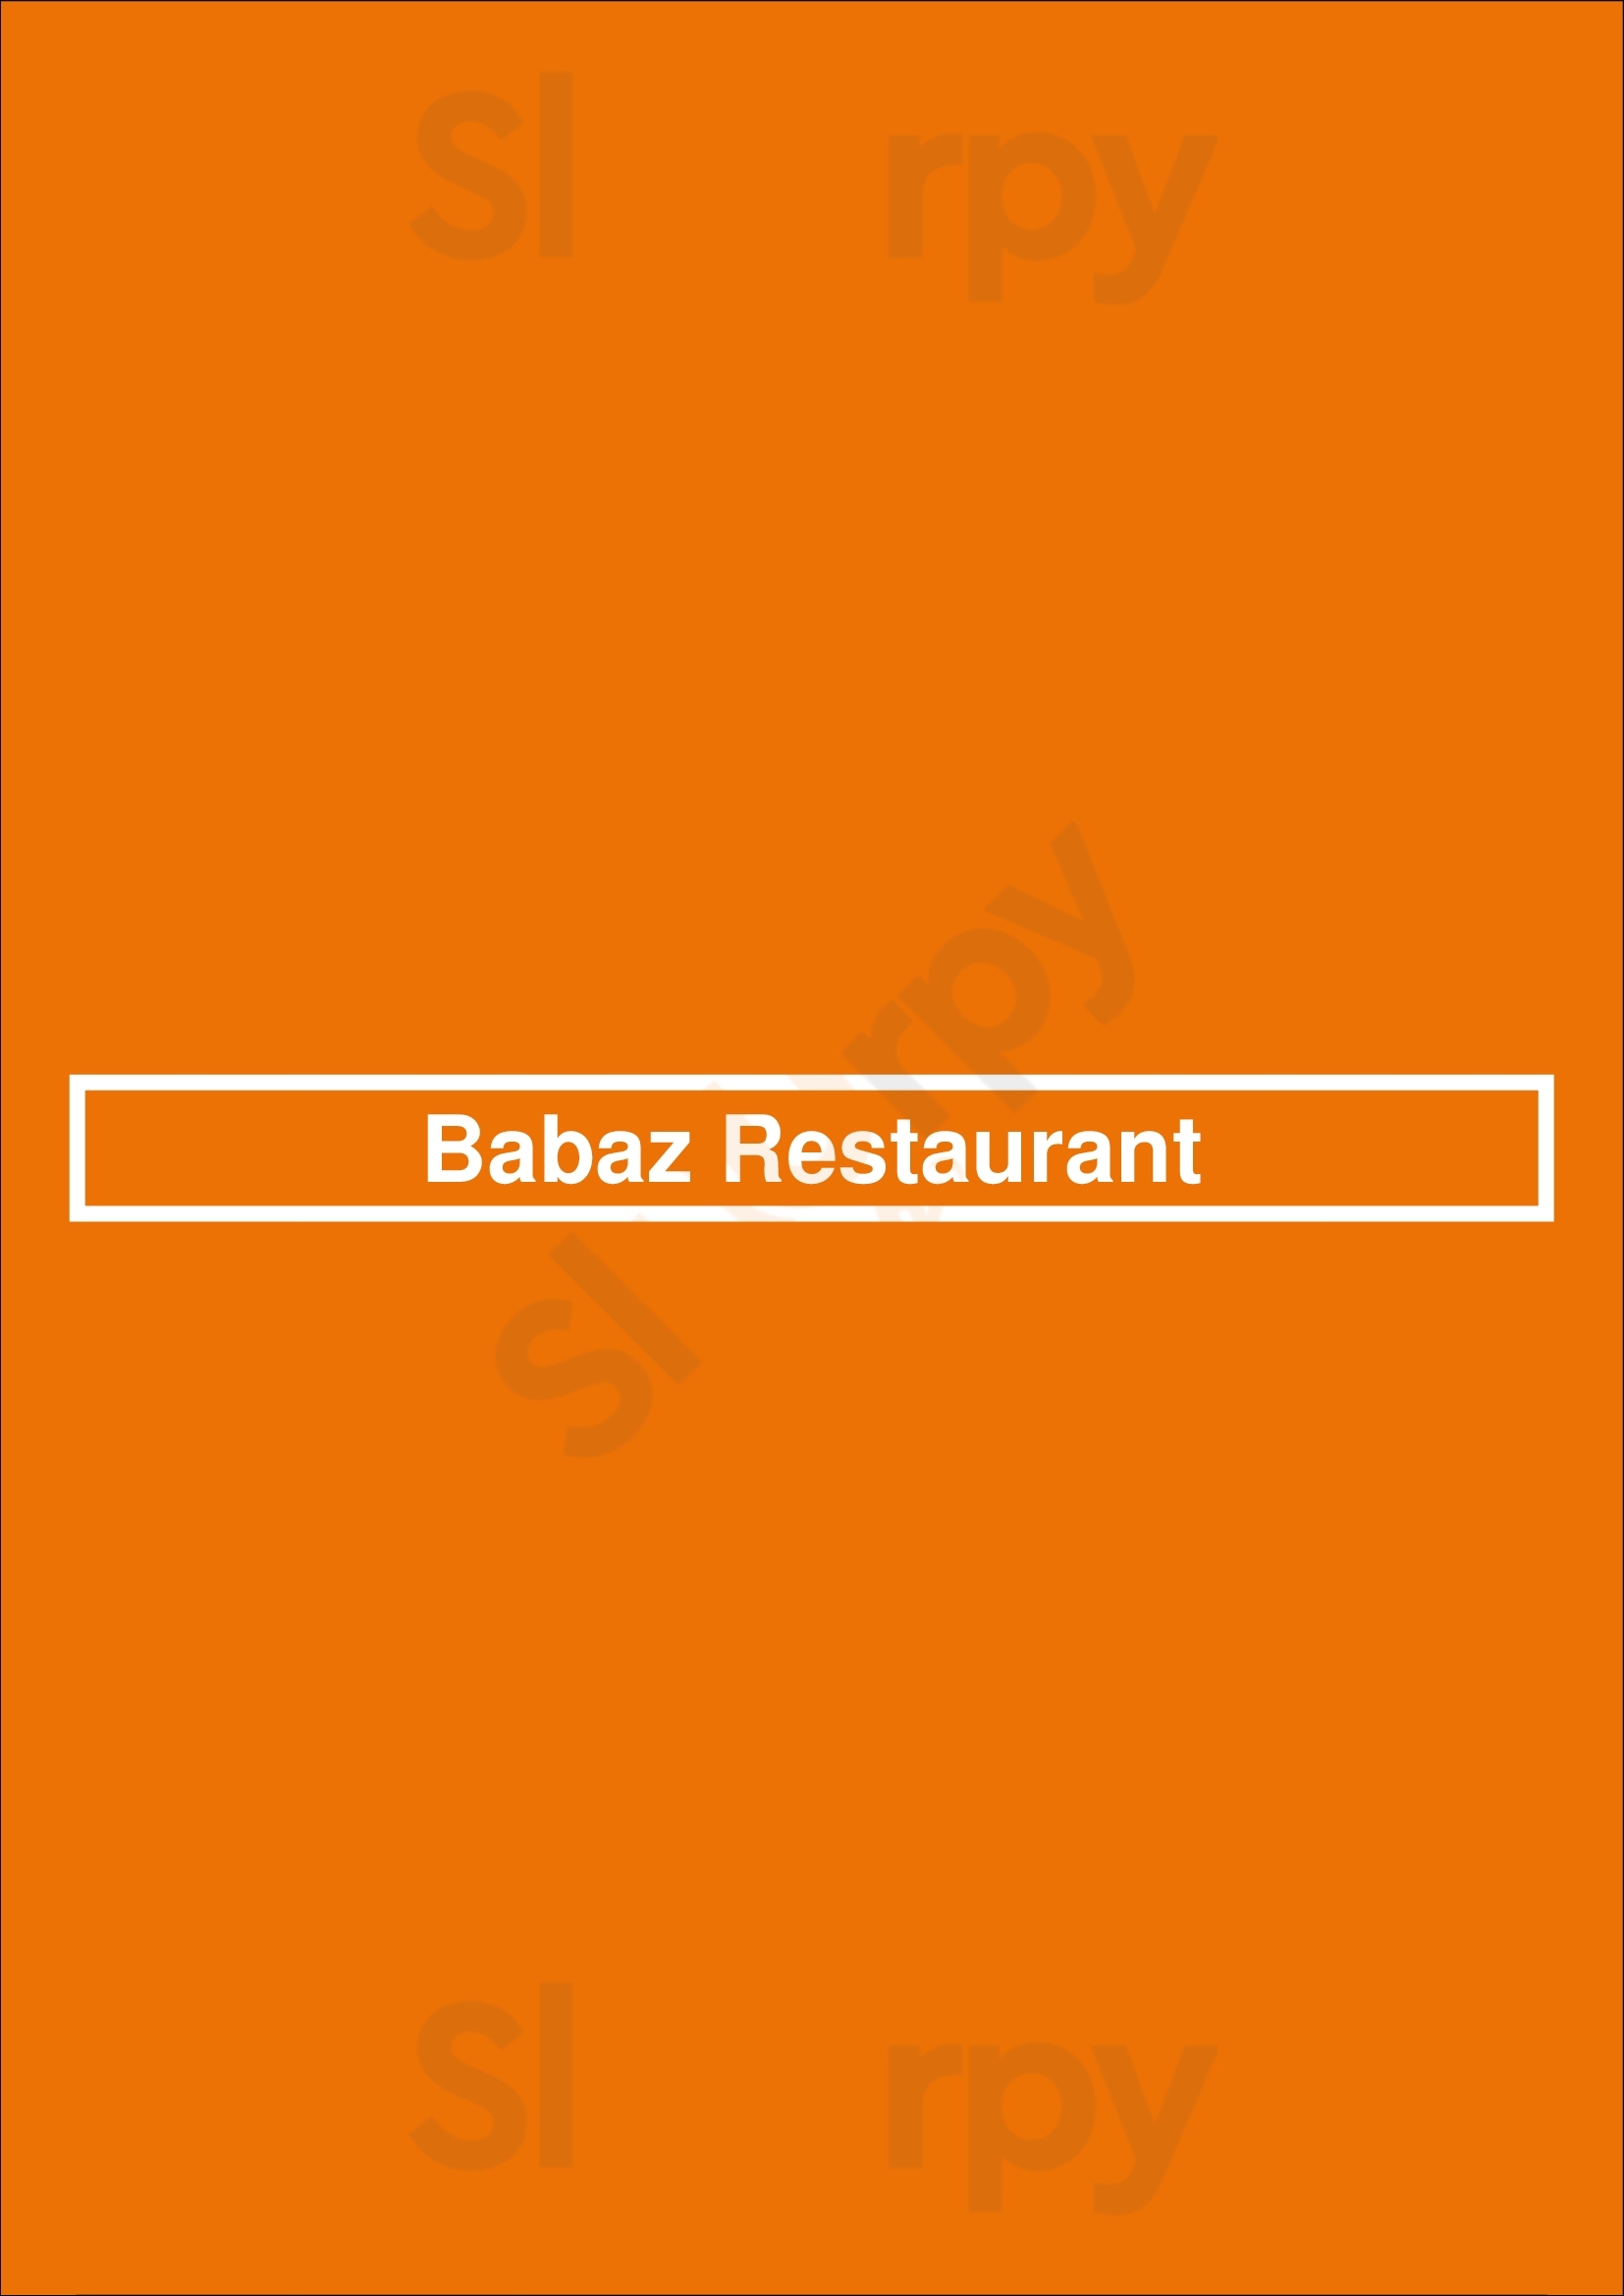 Babaz Restaurant London Menu - 1